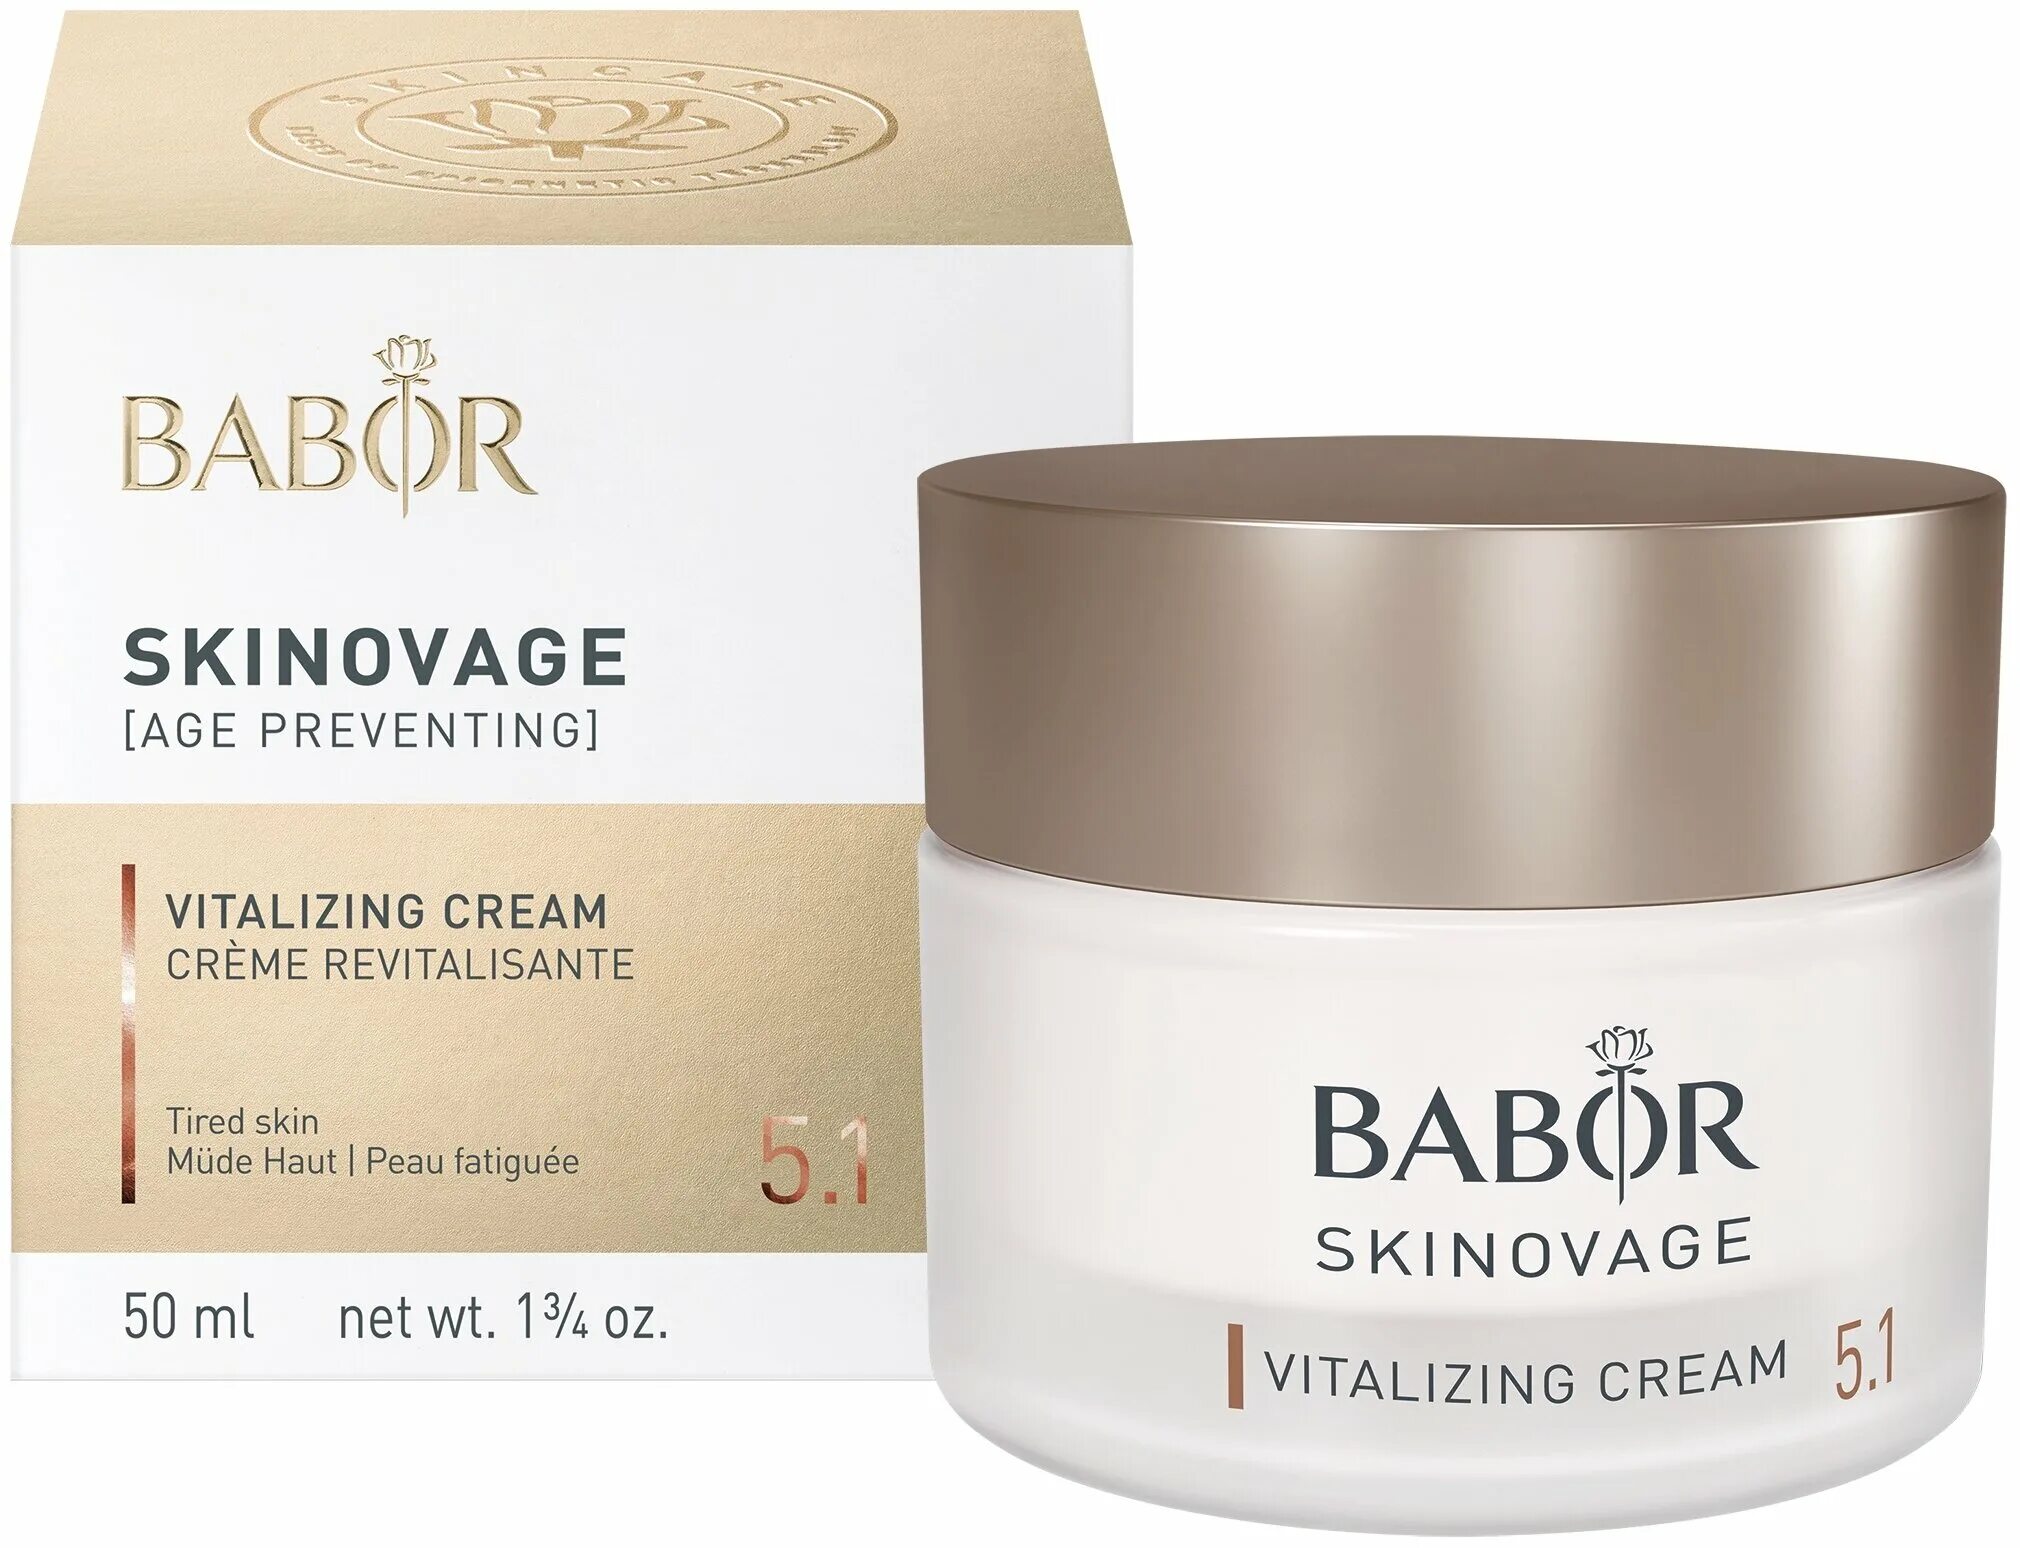 Babor Skinovage Balancing Cream Rich 50ml. Крем Babor Skinovage 5.1. Babor крем для чувствительной кожи Skinovage. Крем для комбинированной кожи 50 мл Babor.